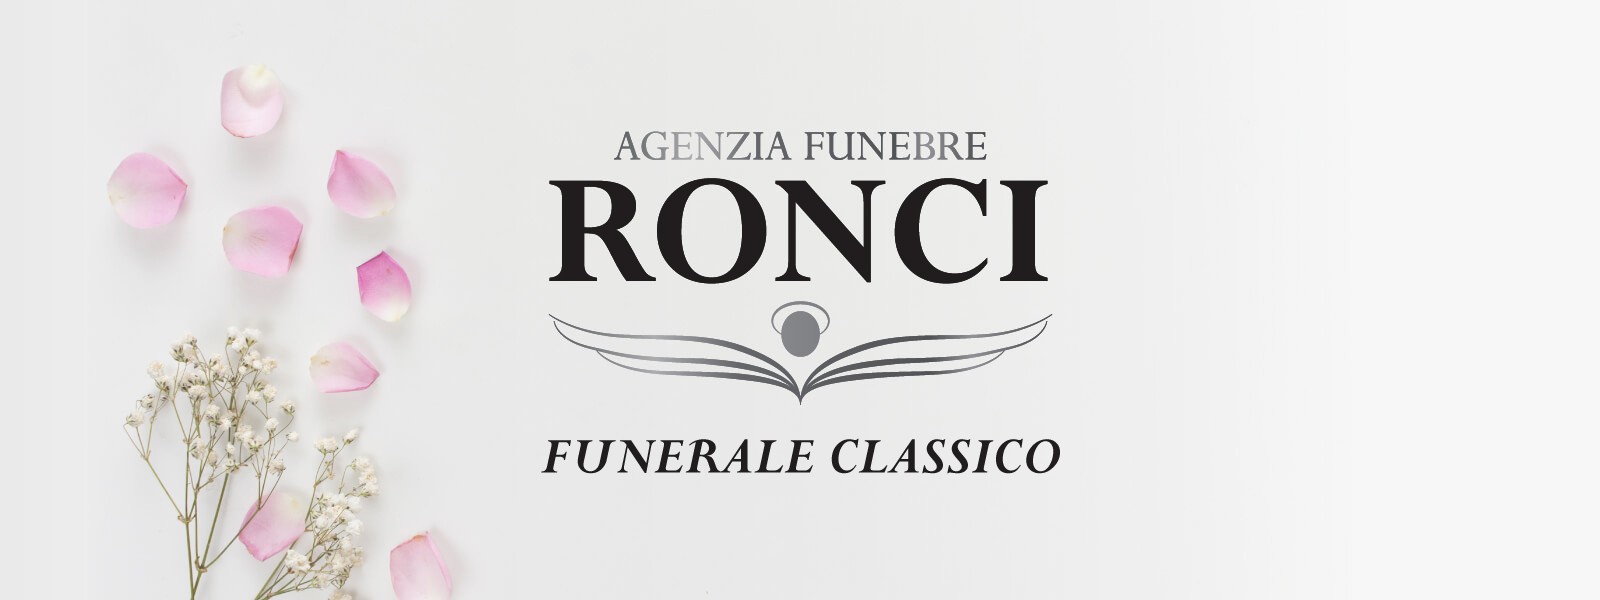 https://www.agenziafunebreronci.it/immagini_pagine/257/funerale-classico-257-600.jpg